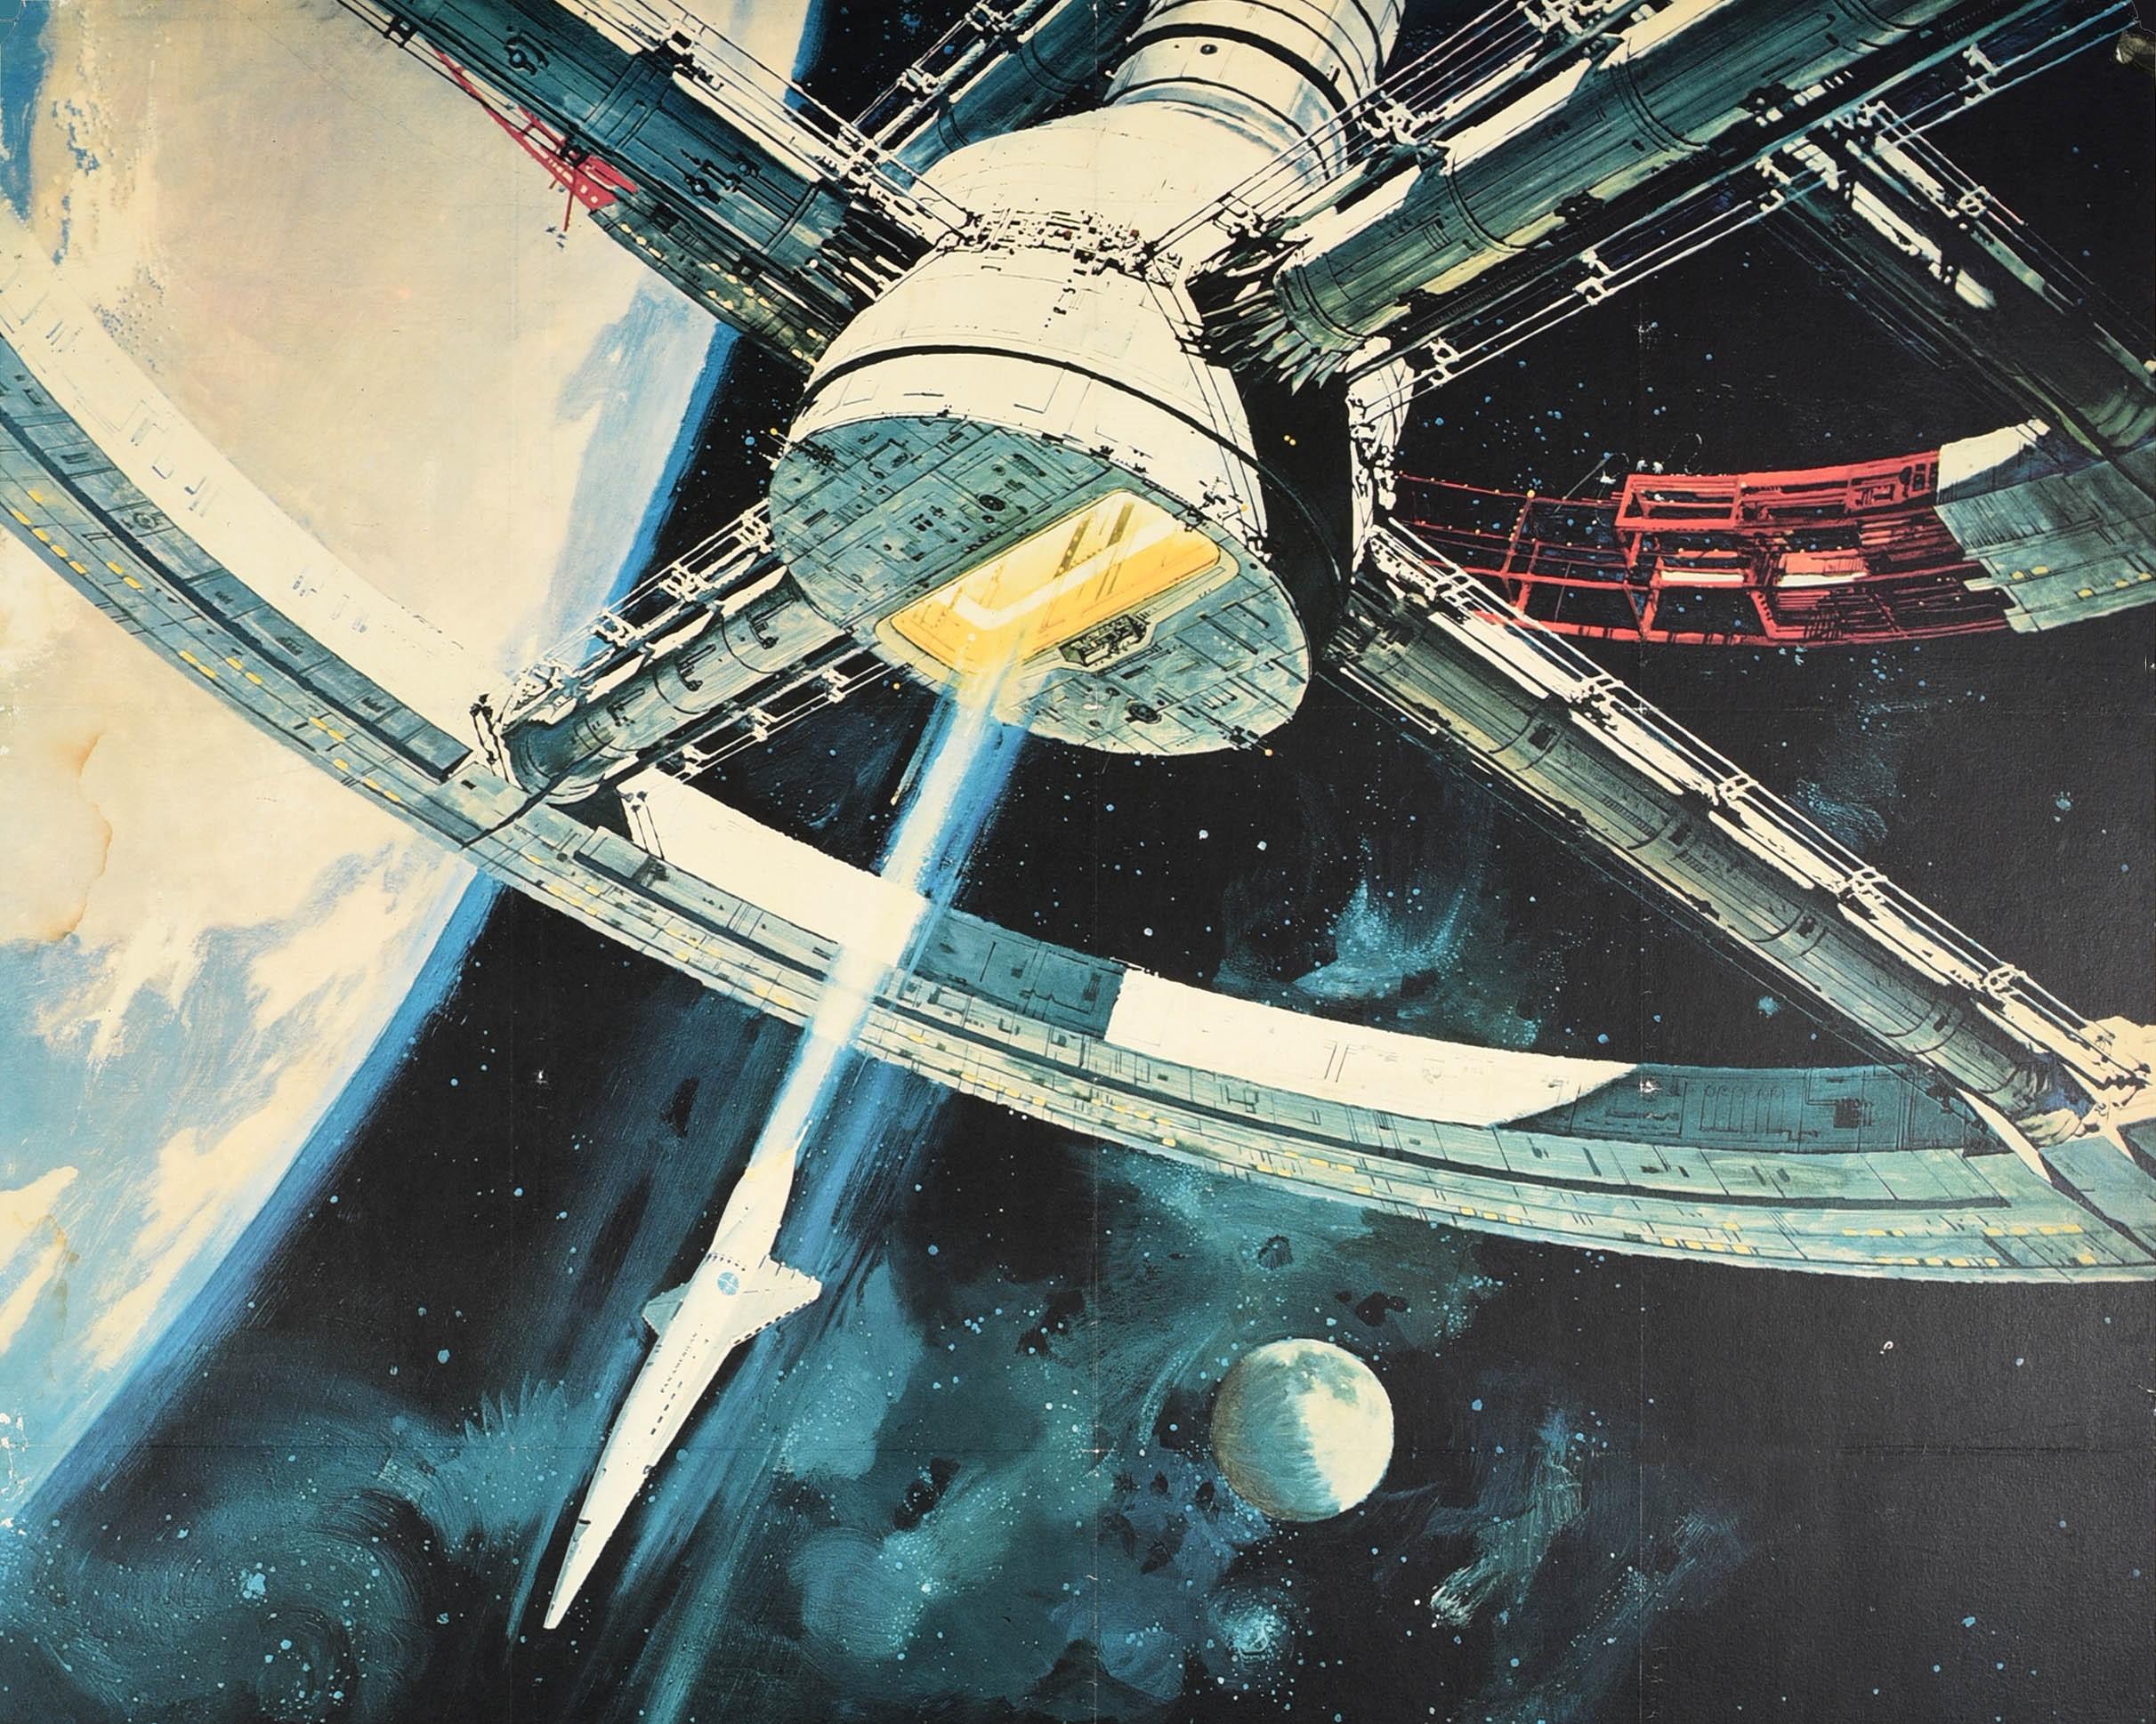 Original Vintage Film Poster 2001: A Space Odyssey Stanley Kubrick Sci-Fi Movie - Print by Robert McCall